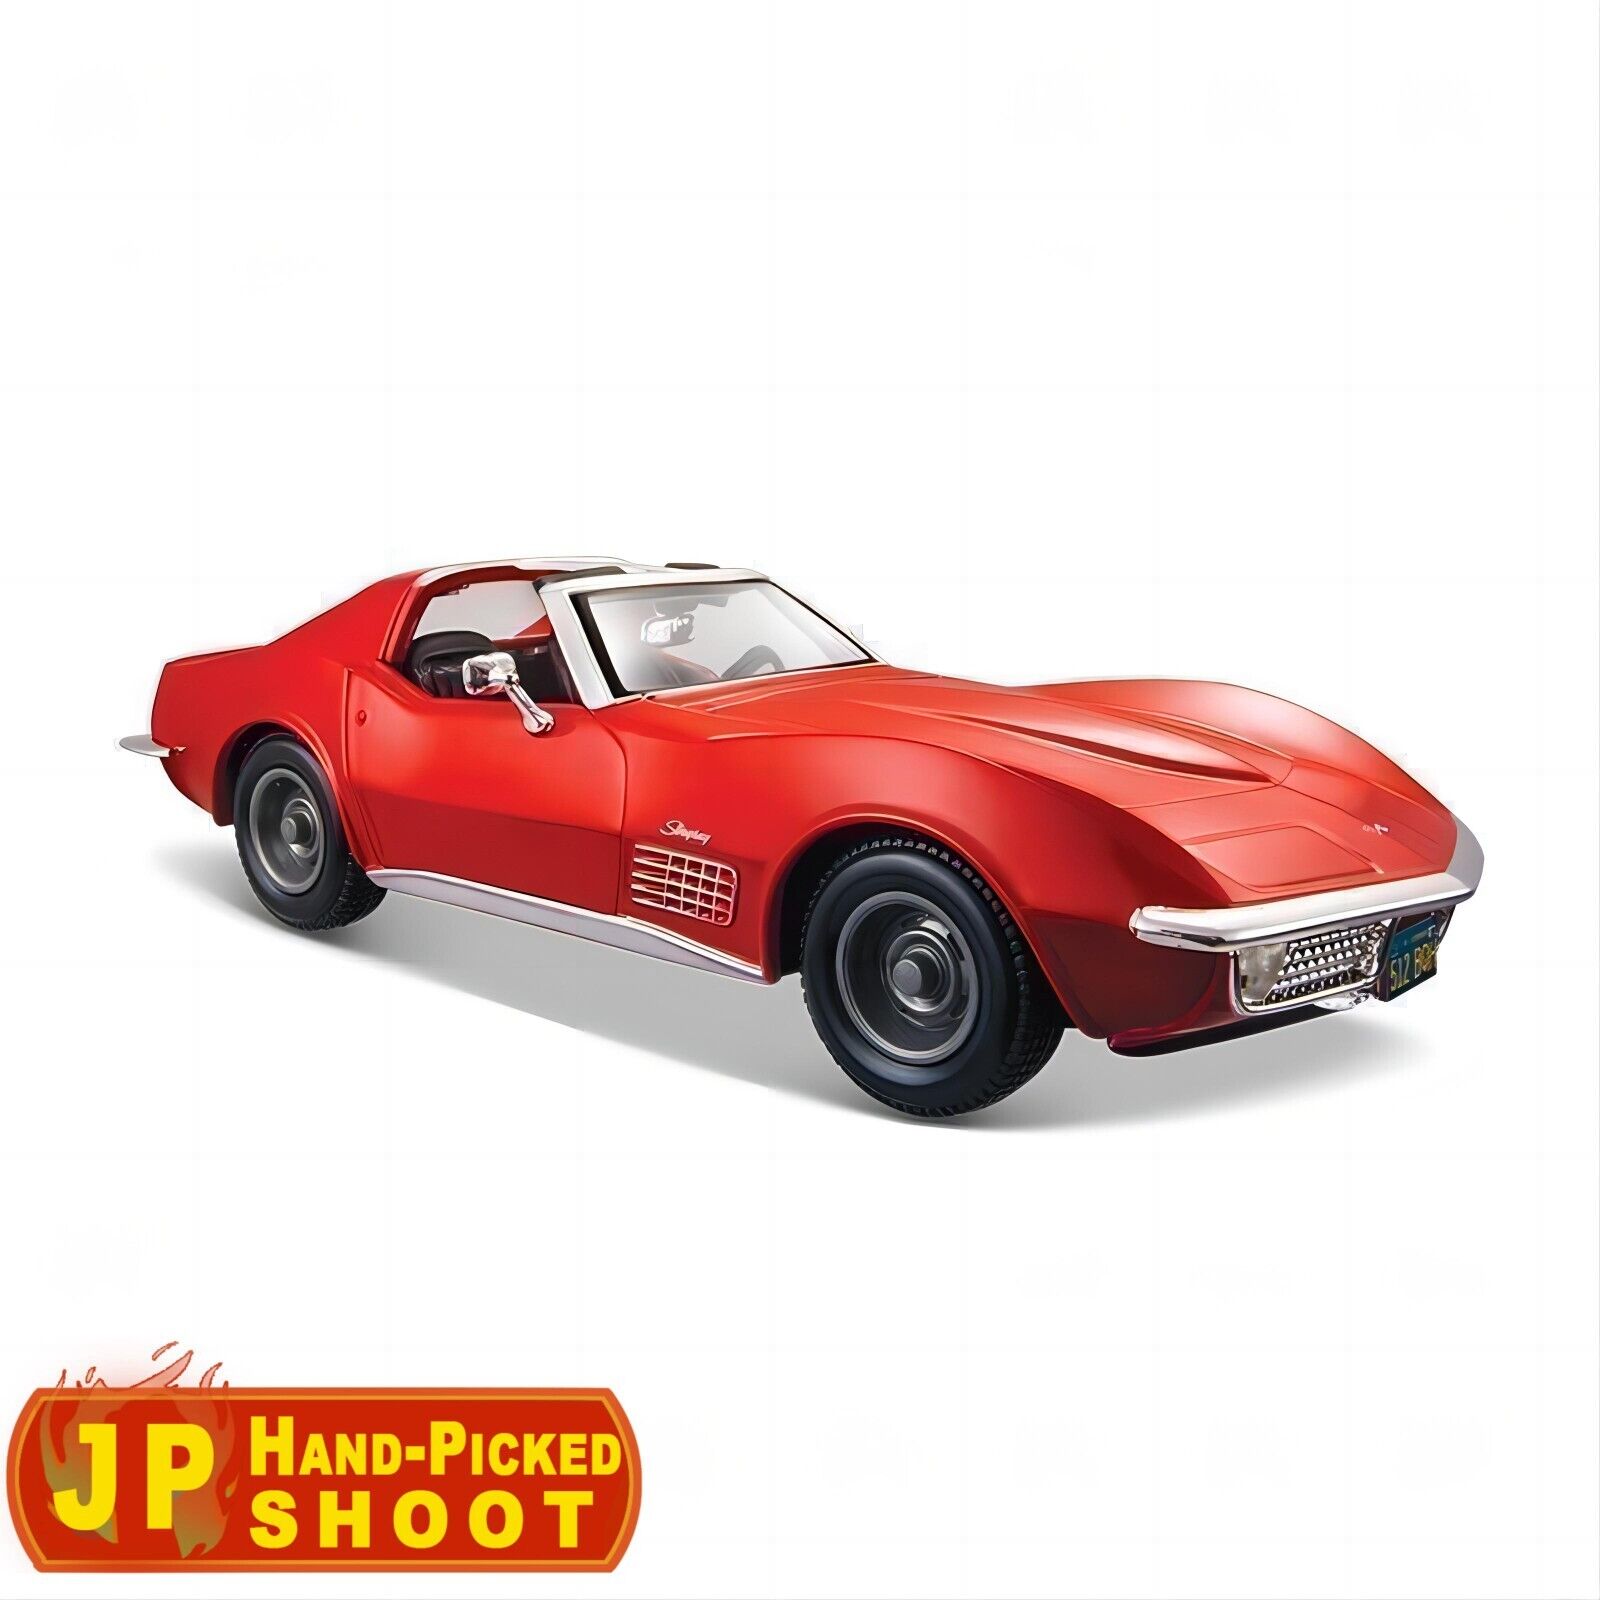 Model MaiSto 1970 Corvette Red Roadster Car Smart 14cm Figure Vehicle Toy